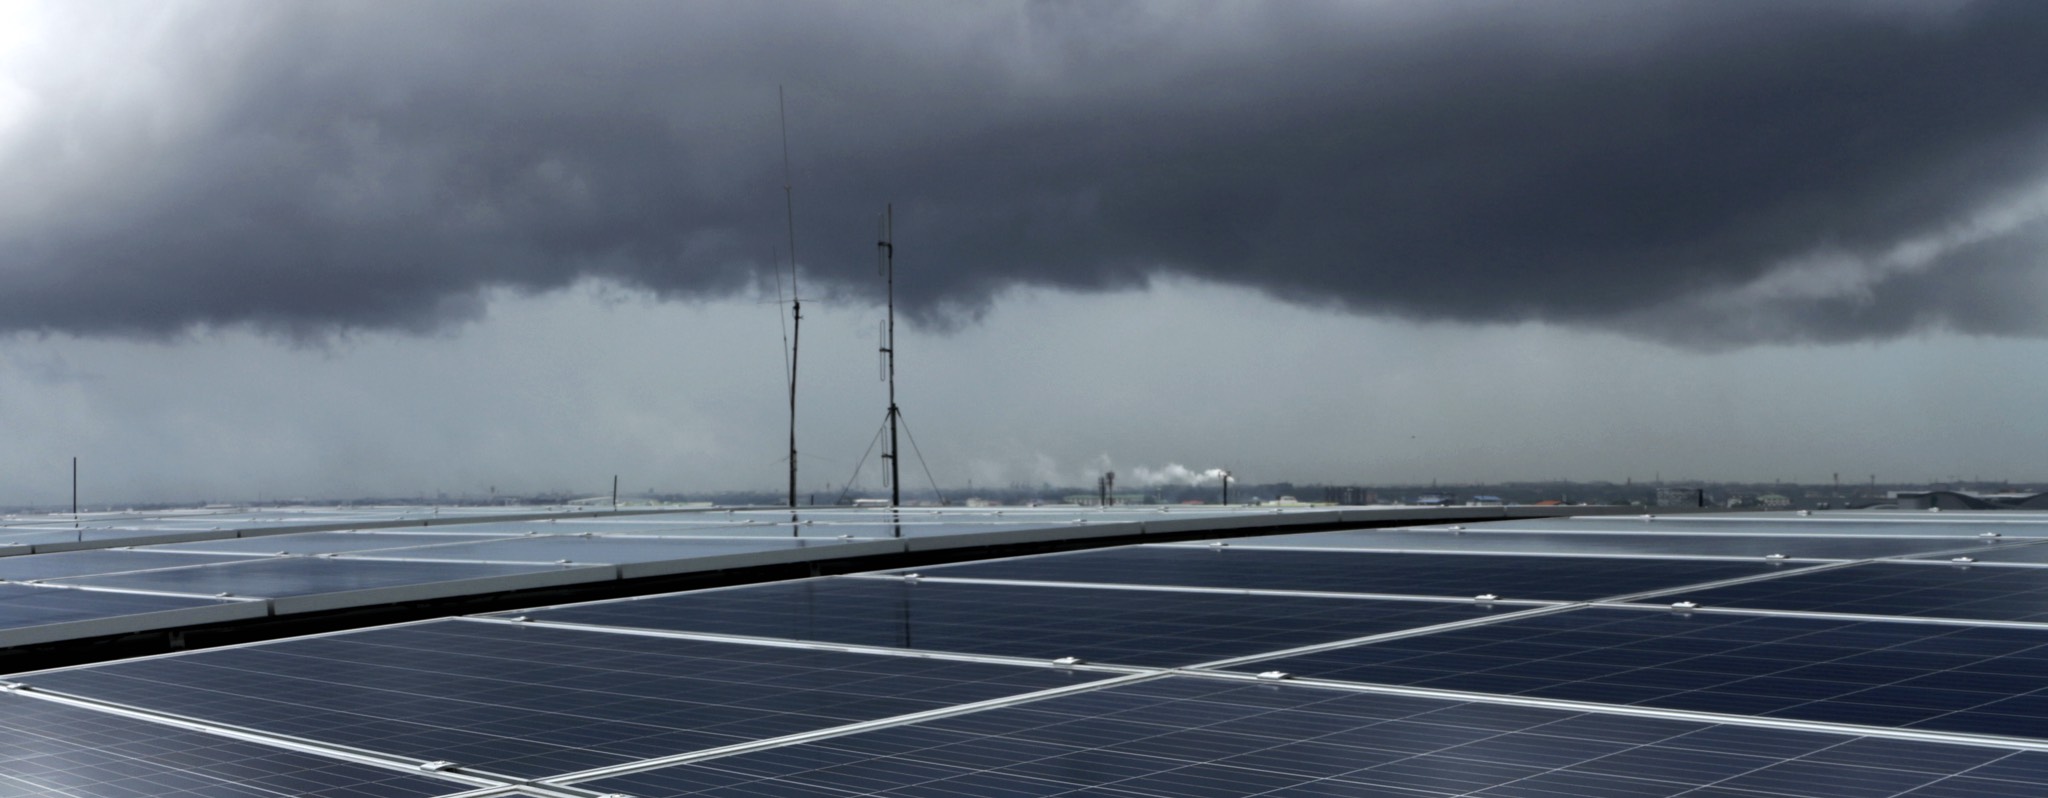 Solar panels under rain conditions